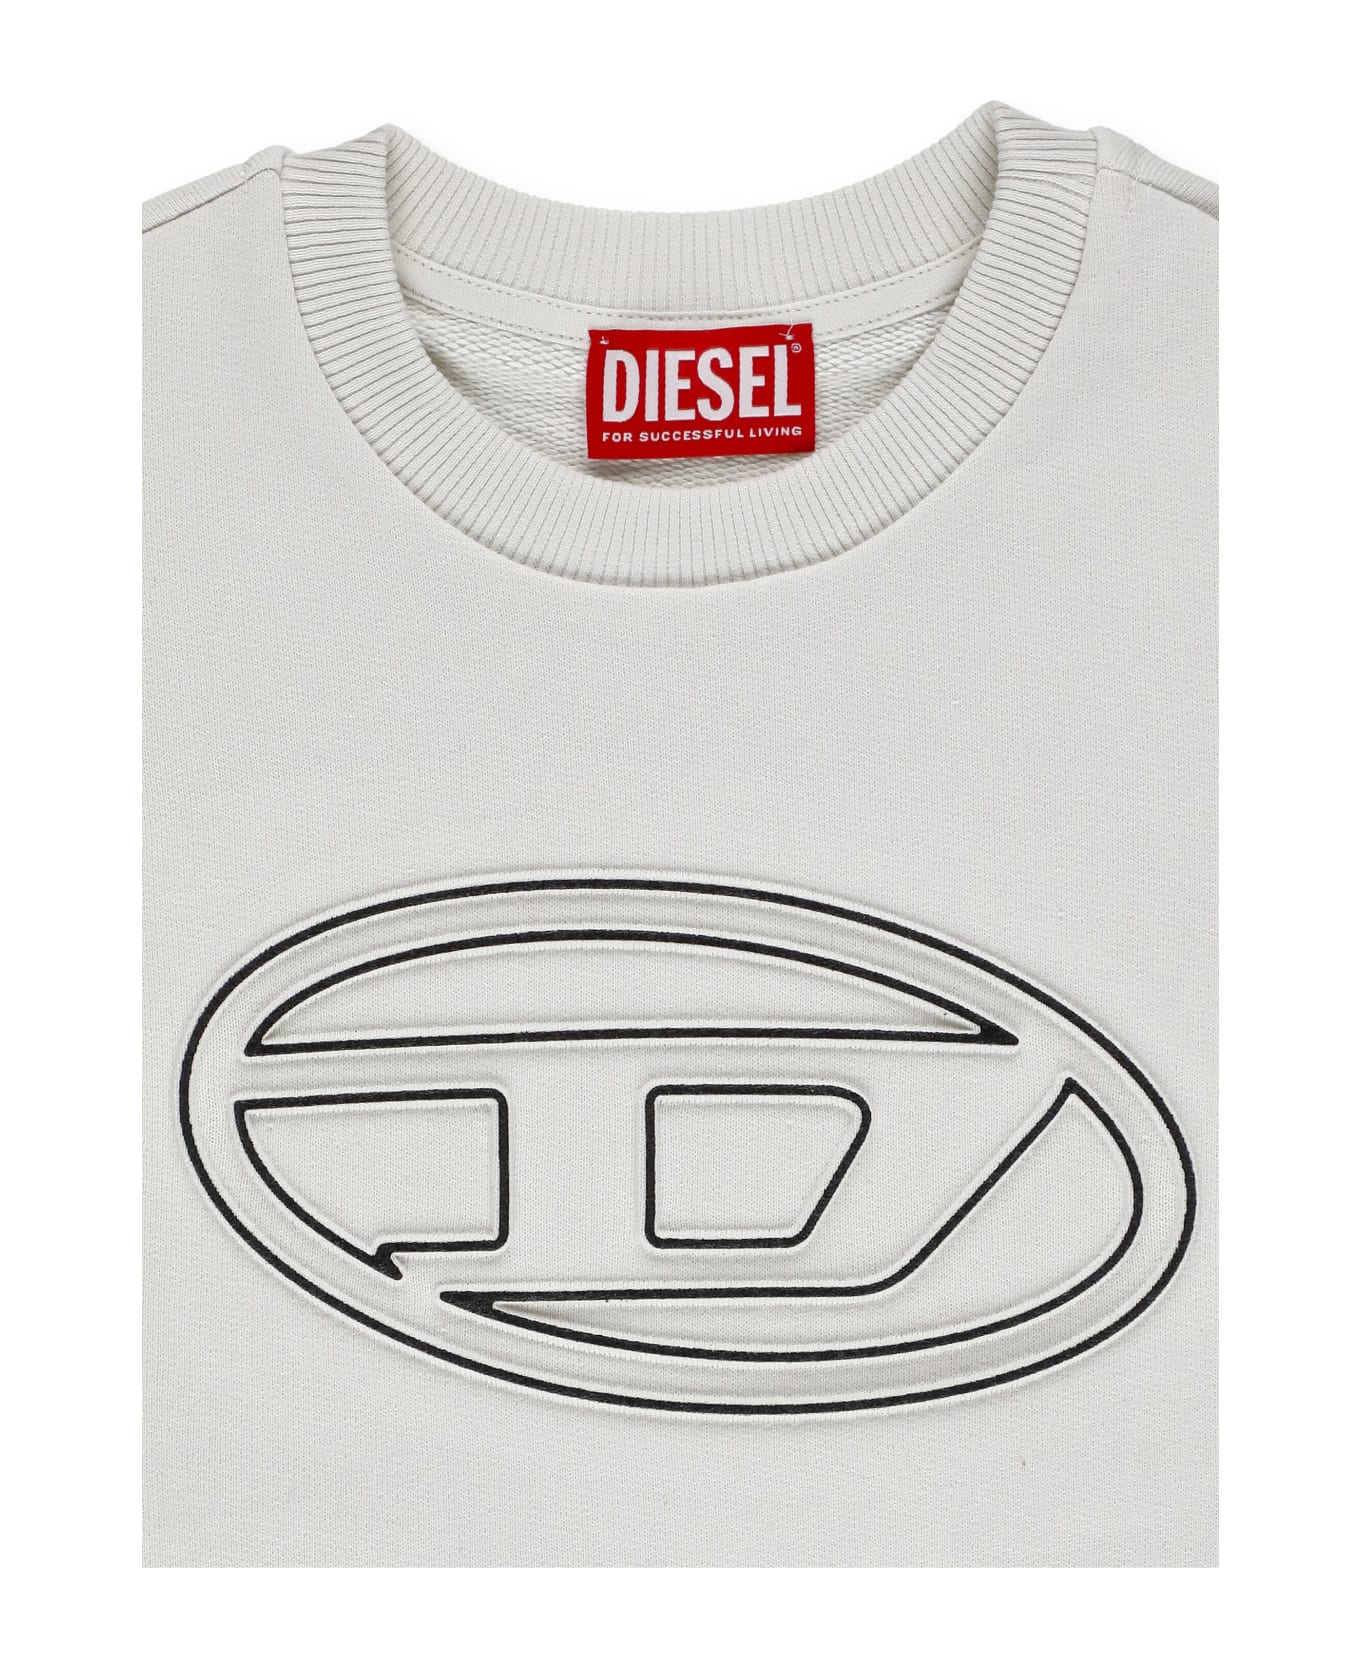 Diesel Smartbigoval Over Sweatshirt - White